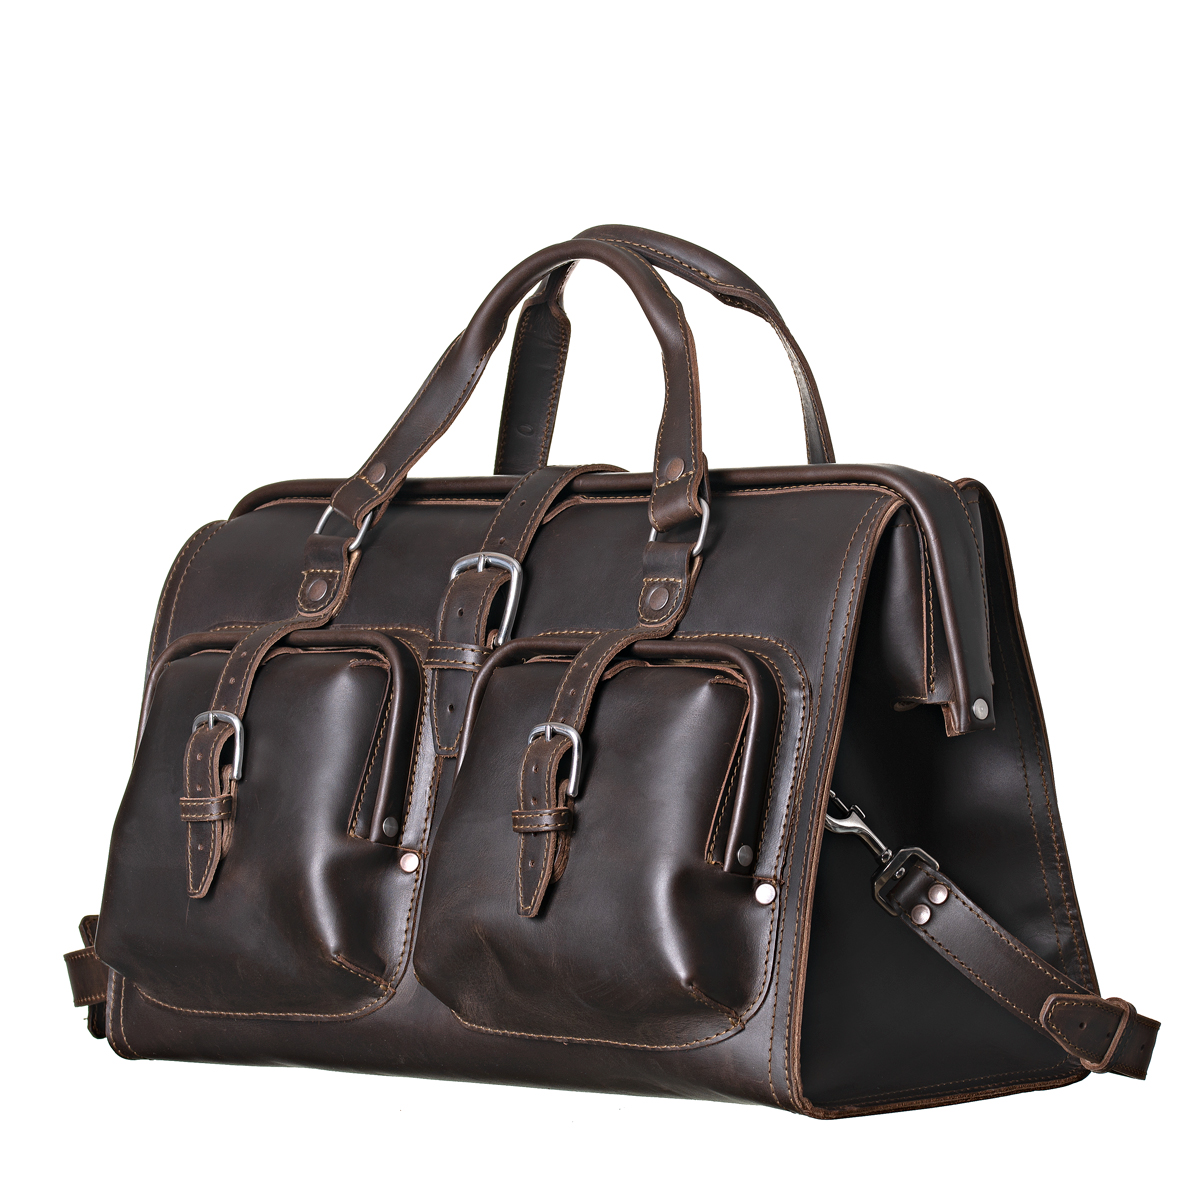 Leather Backpacks for sale in Colorado Springs, Colorado | Facebook  Marketplace | Facebook